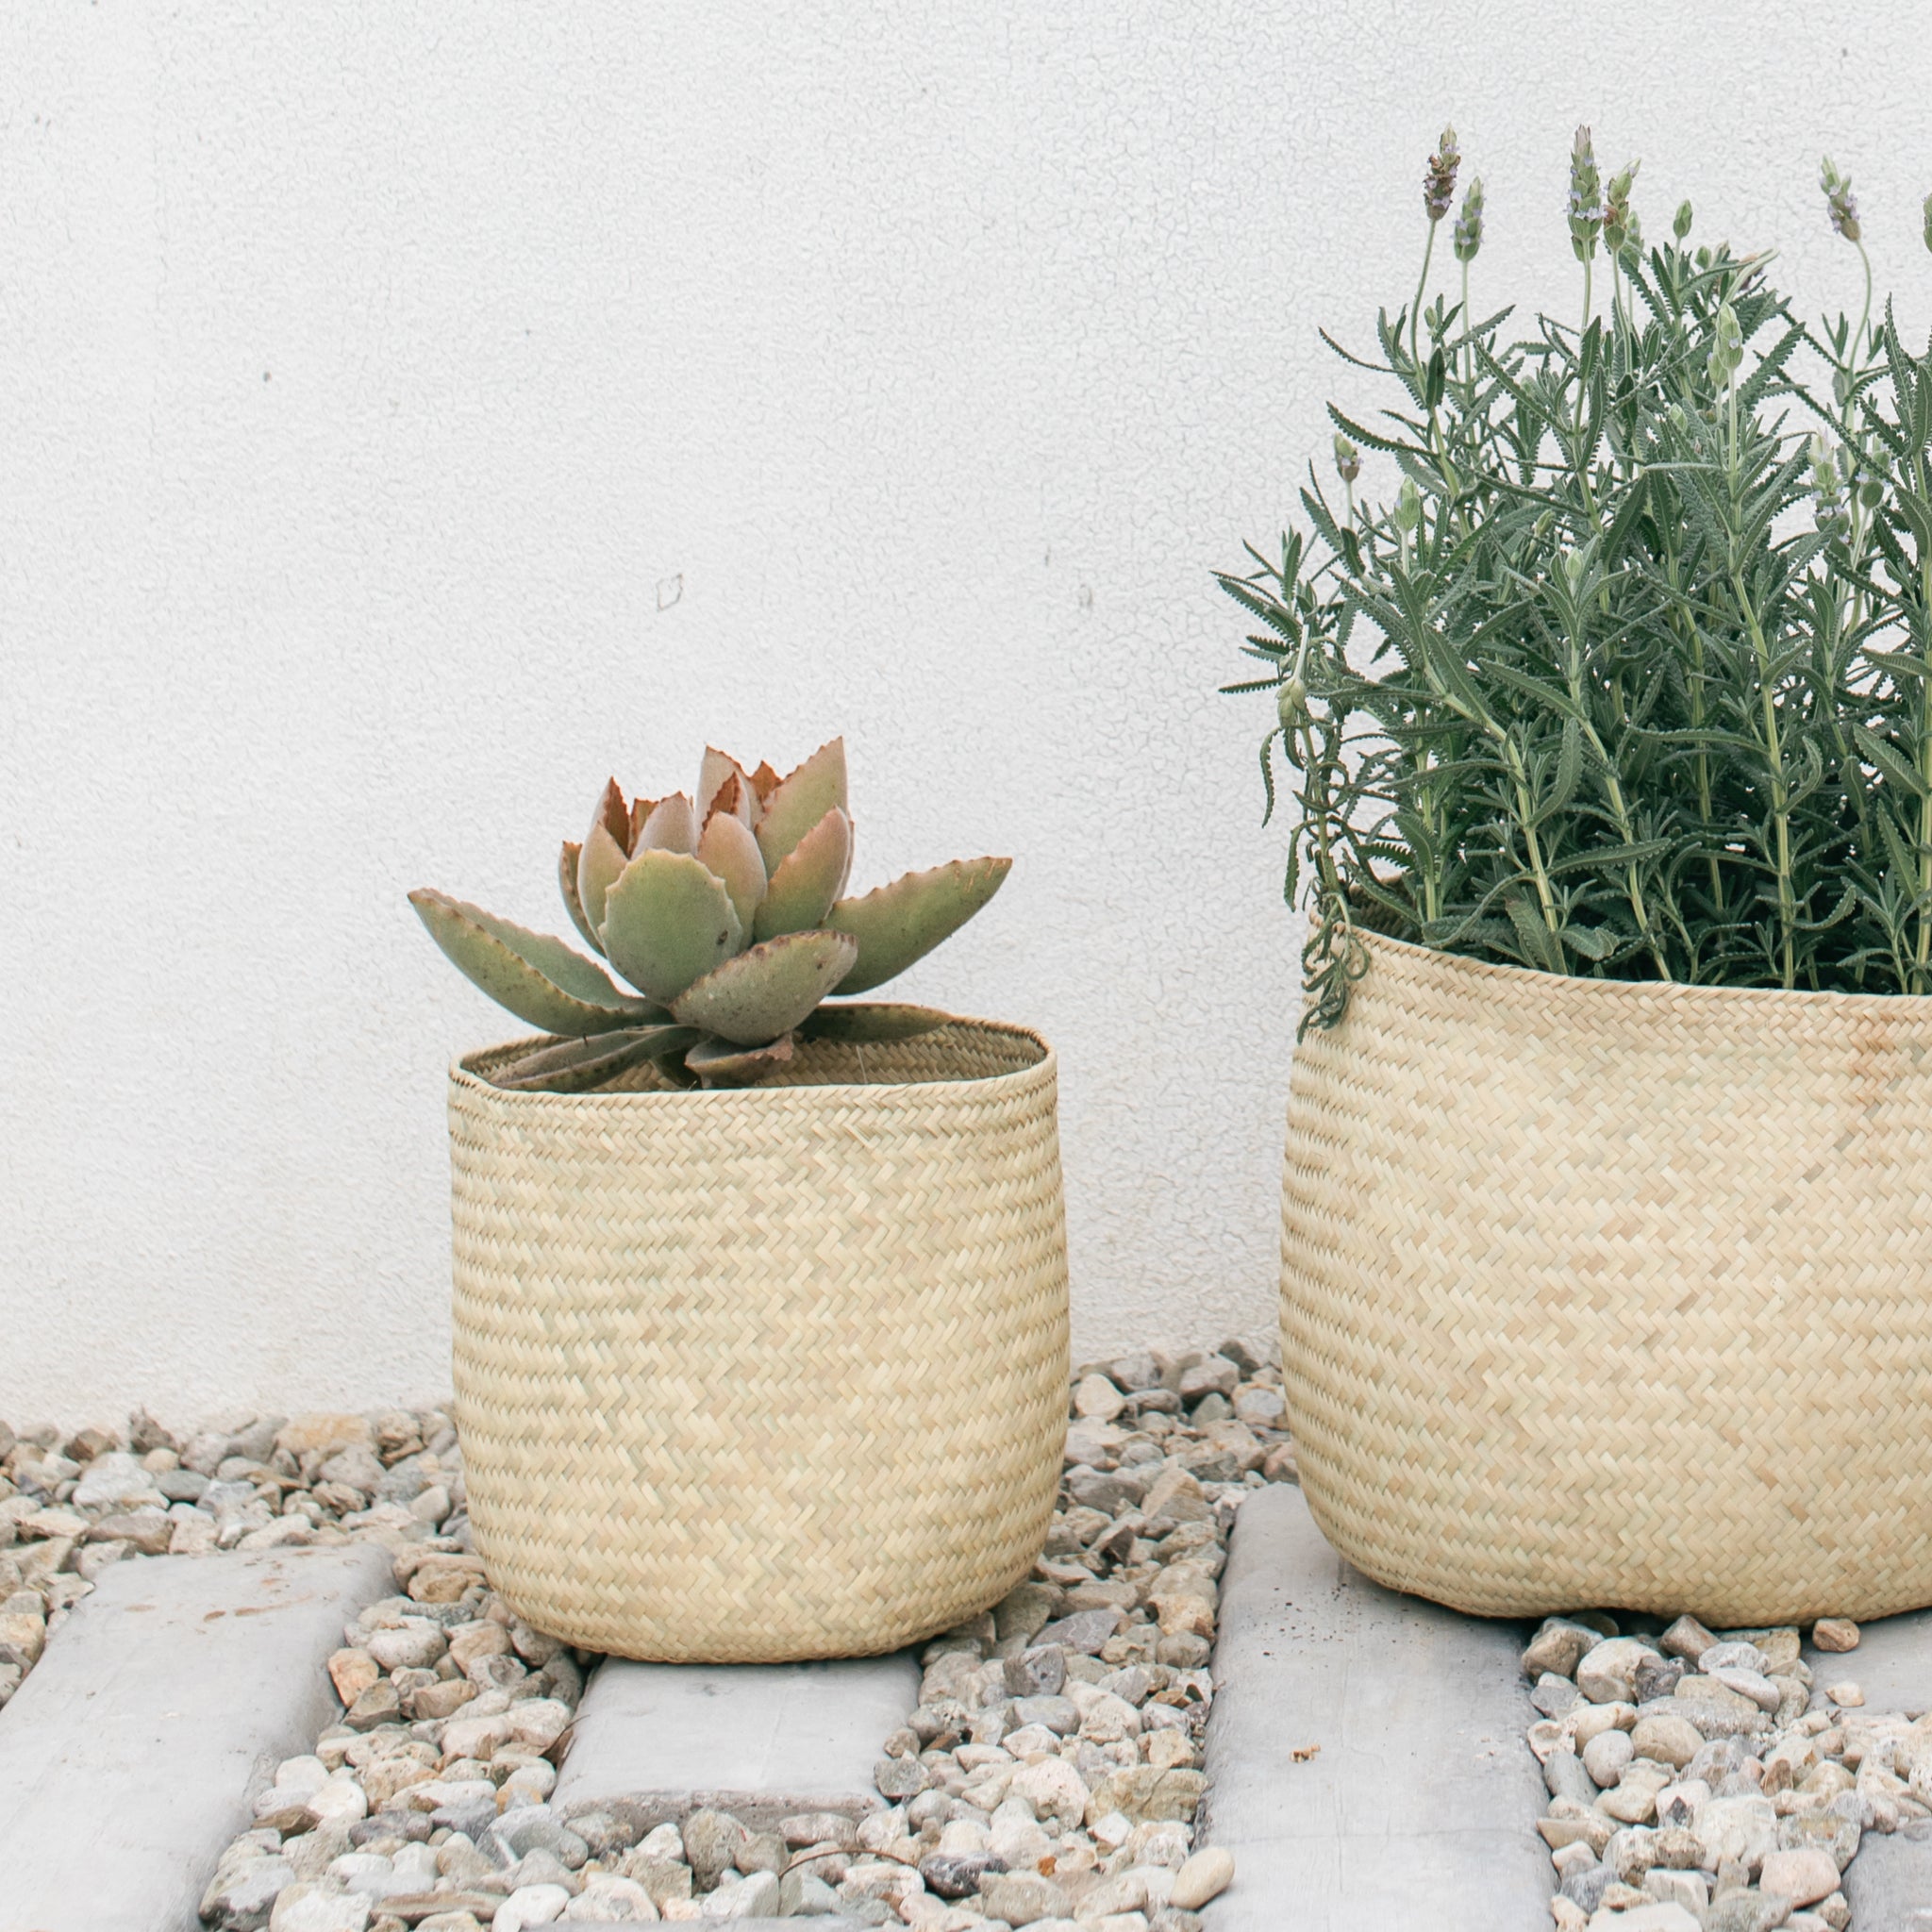 Handwoven Oaxaca palm baskets with plants.